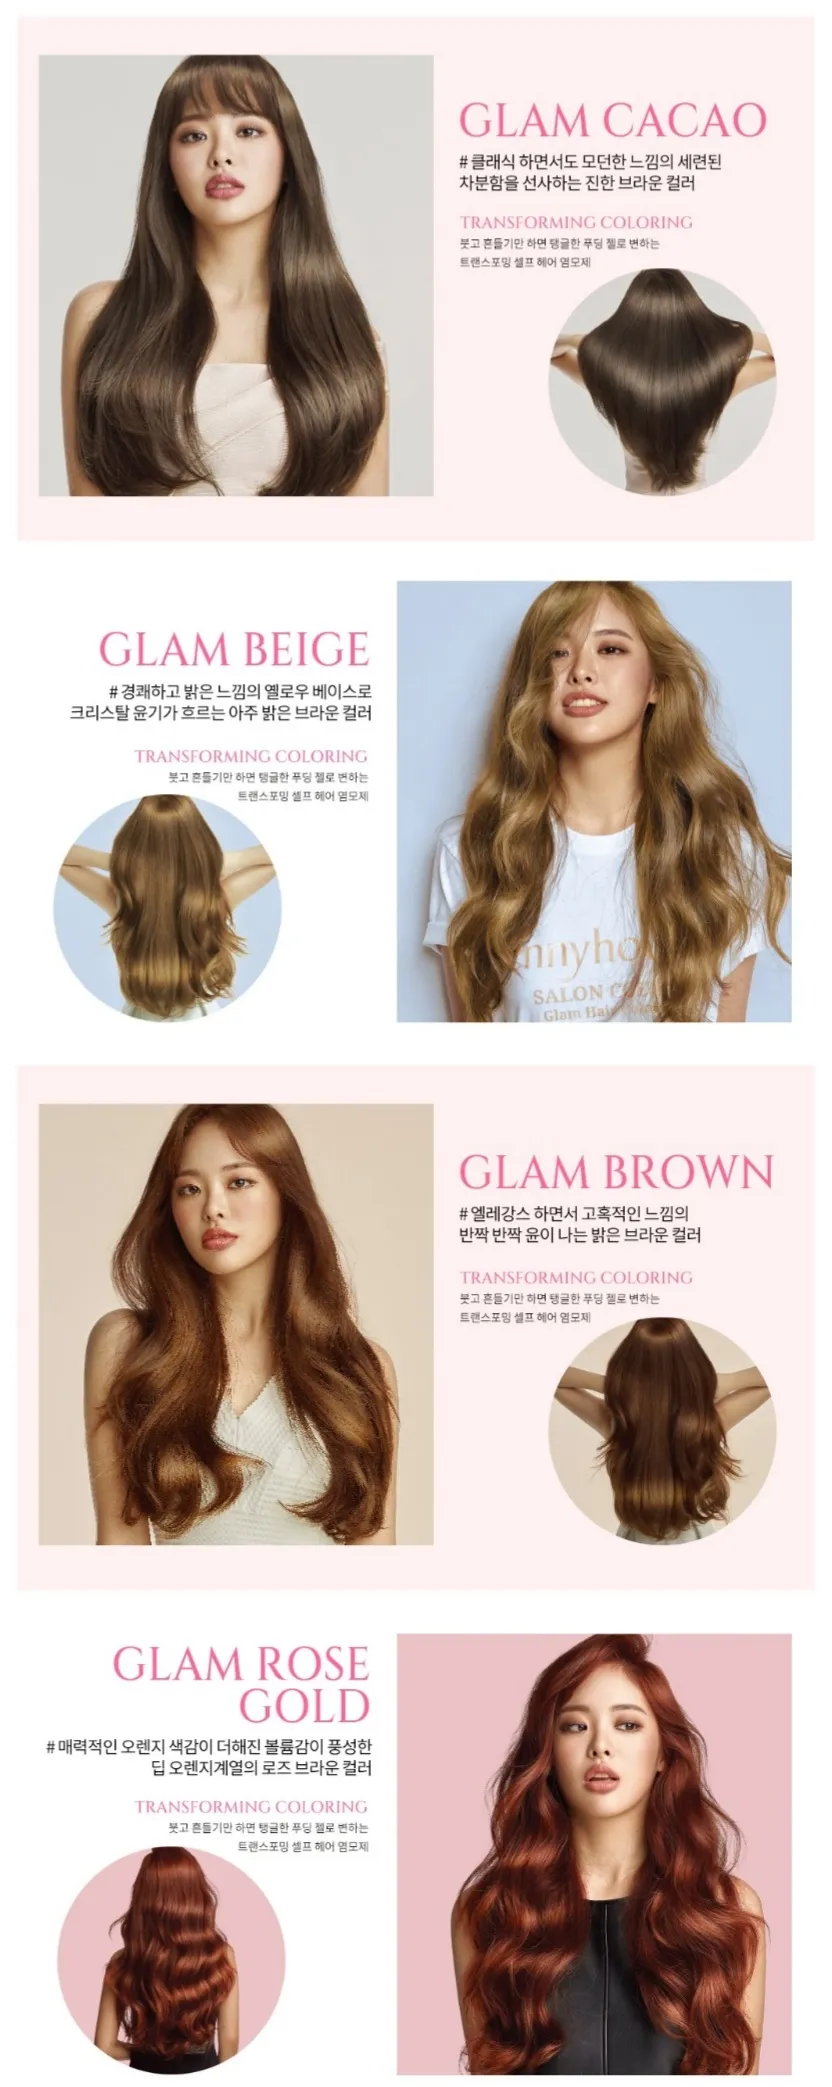 JENNYHOUSE New Salon Code Glam Hair Color (4 Colors) Korean Hair Coloring  Treatment - Seoin | Lazada PH